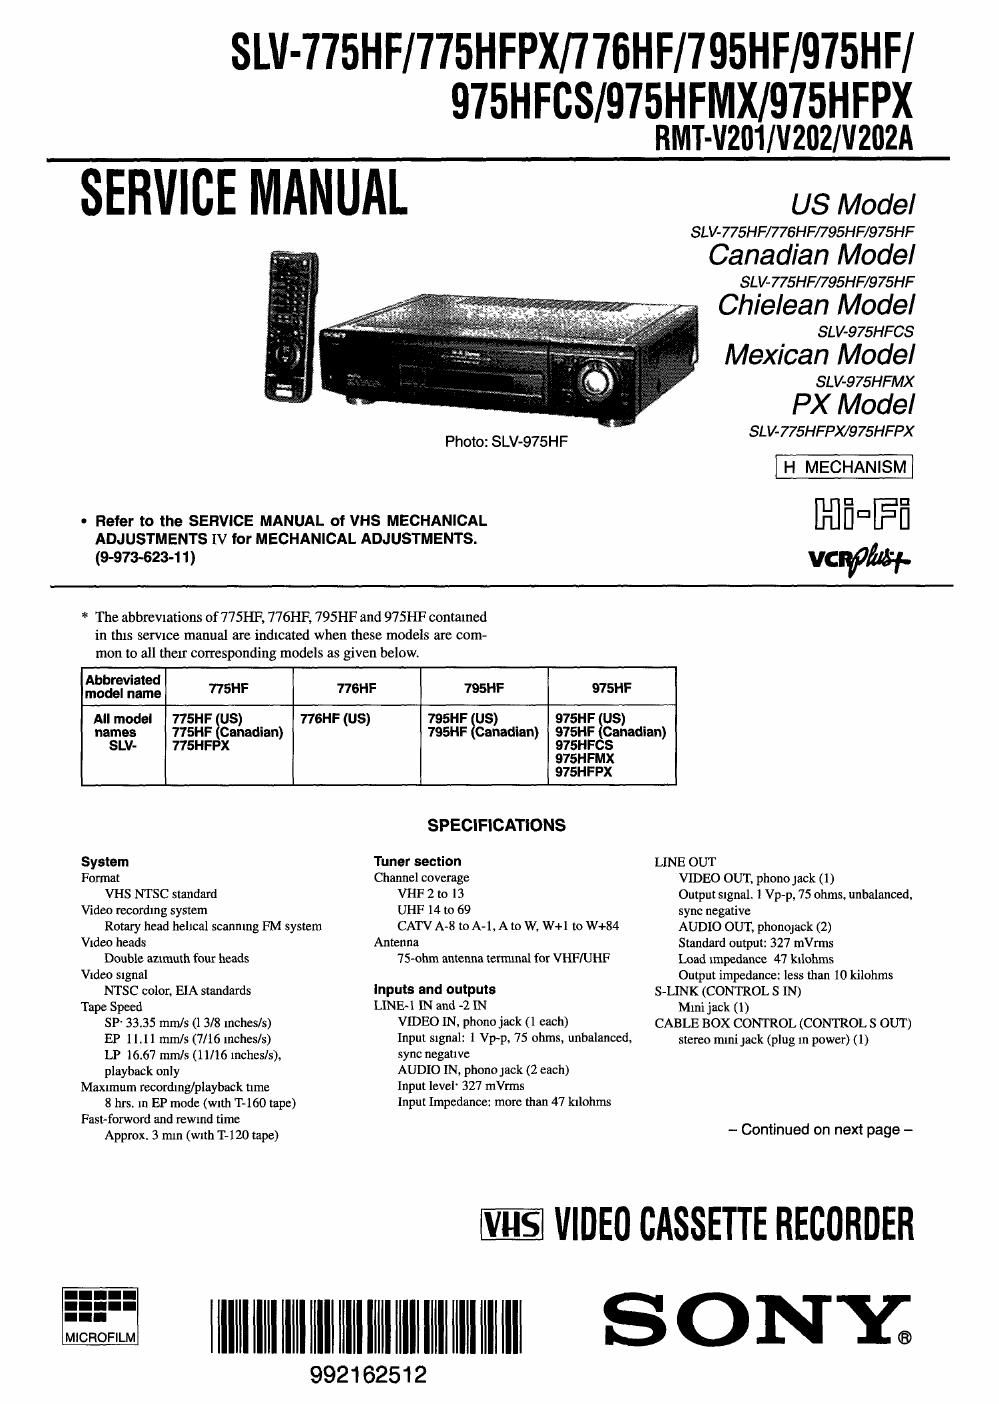 sony slv 775 hfpx service manual